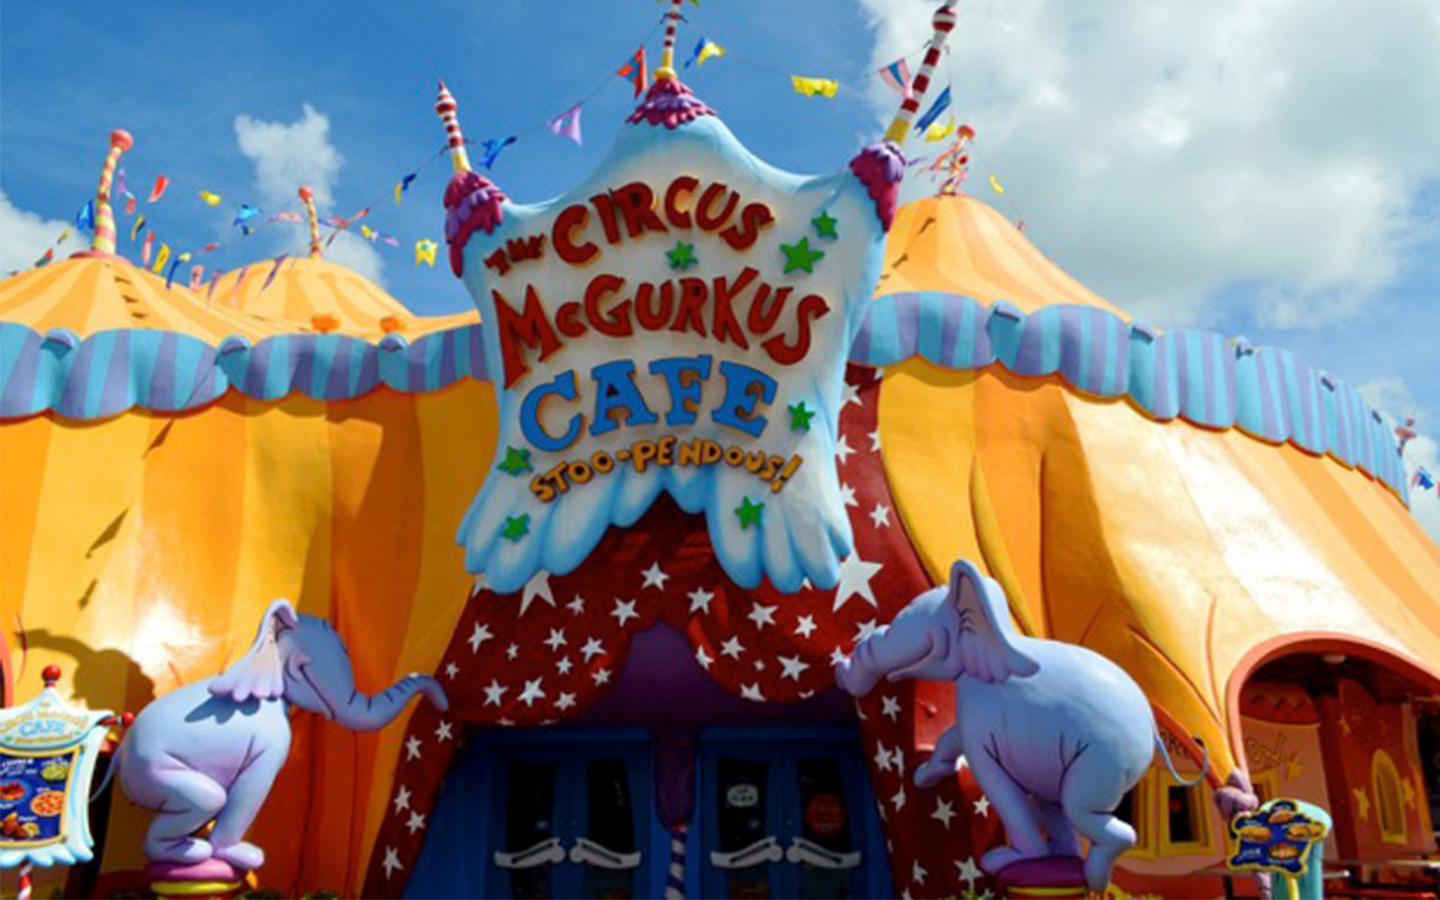 Circus McGurkus Cafe at Suess Landing